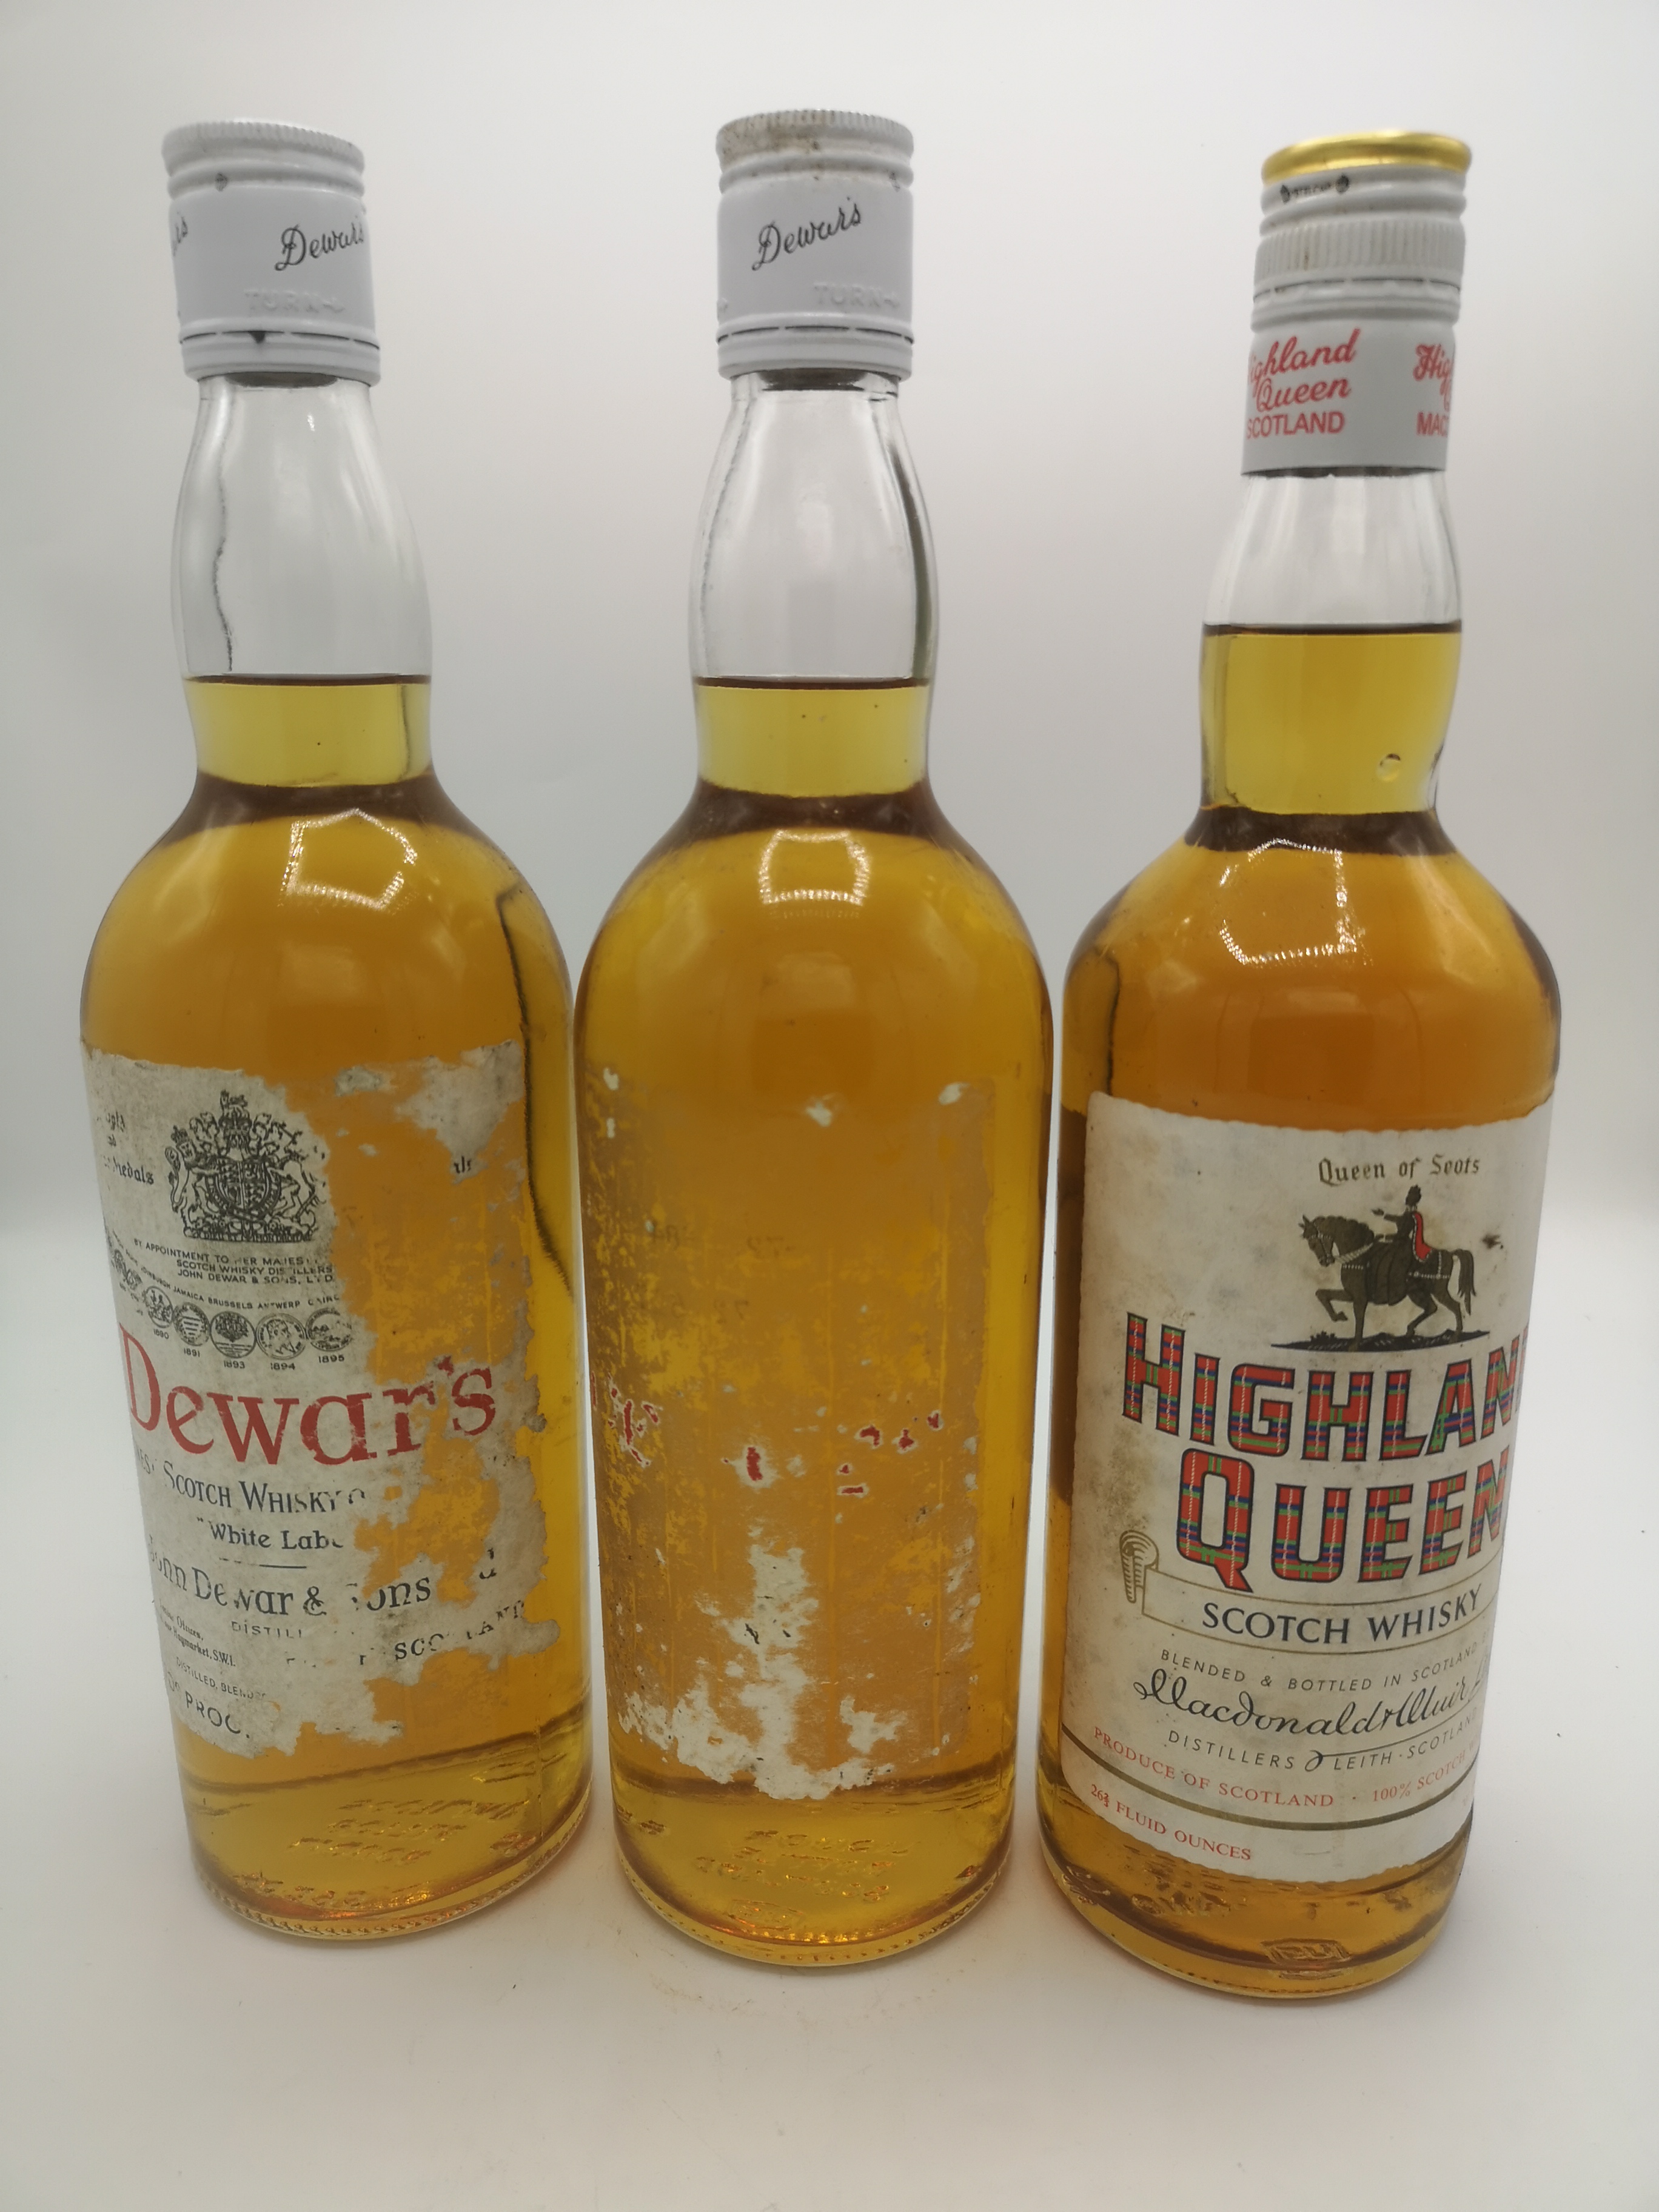 Two bottles of Dewar's Scotch whisky